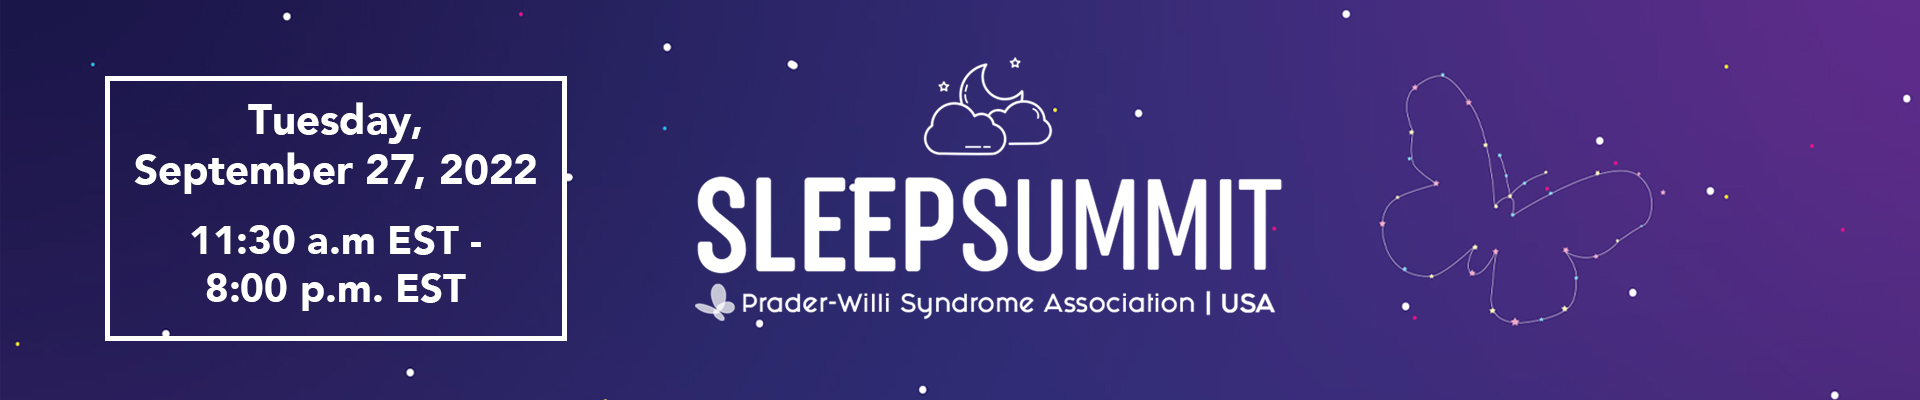 Websitebanner Sleepsummit2, Prader-Willi Syndrome Association | USA